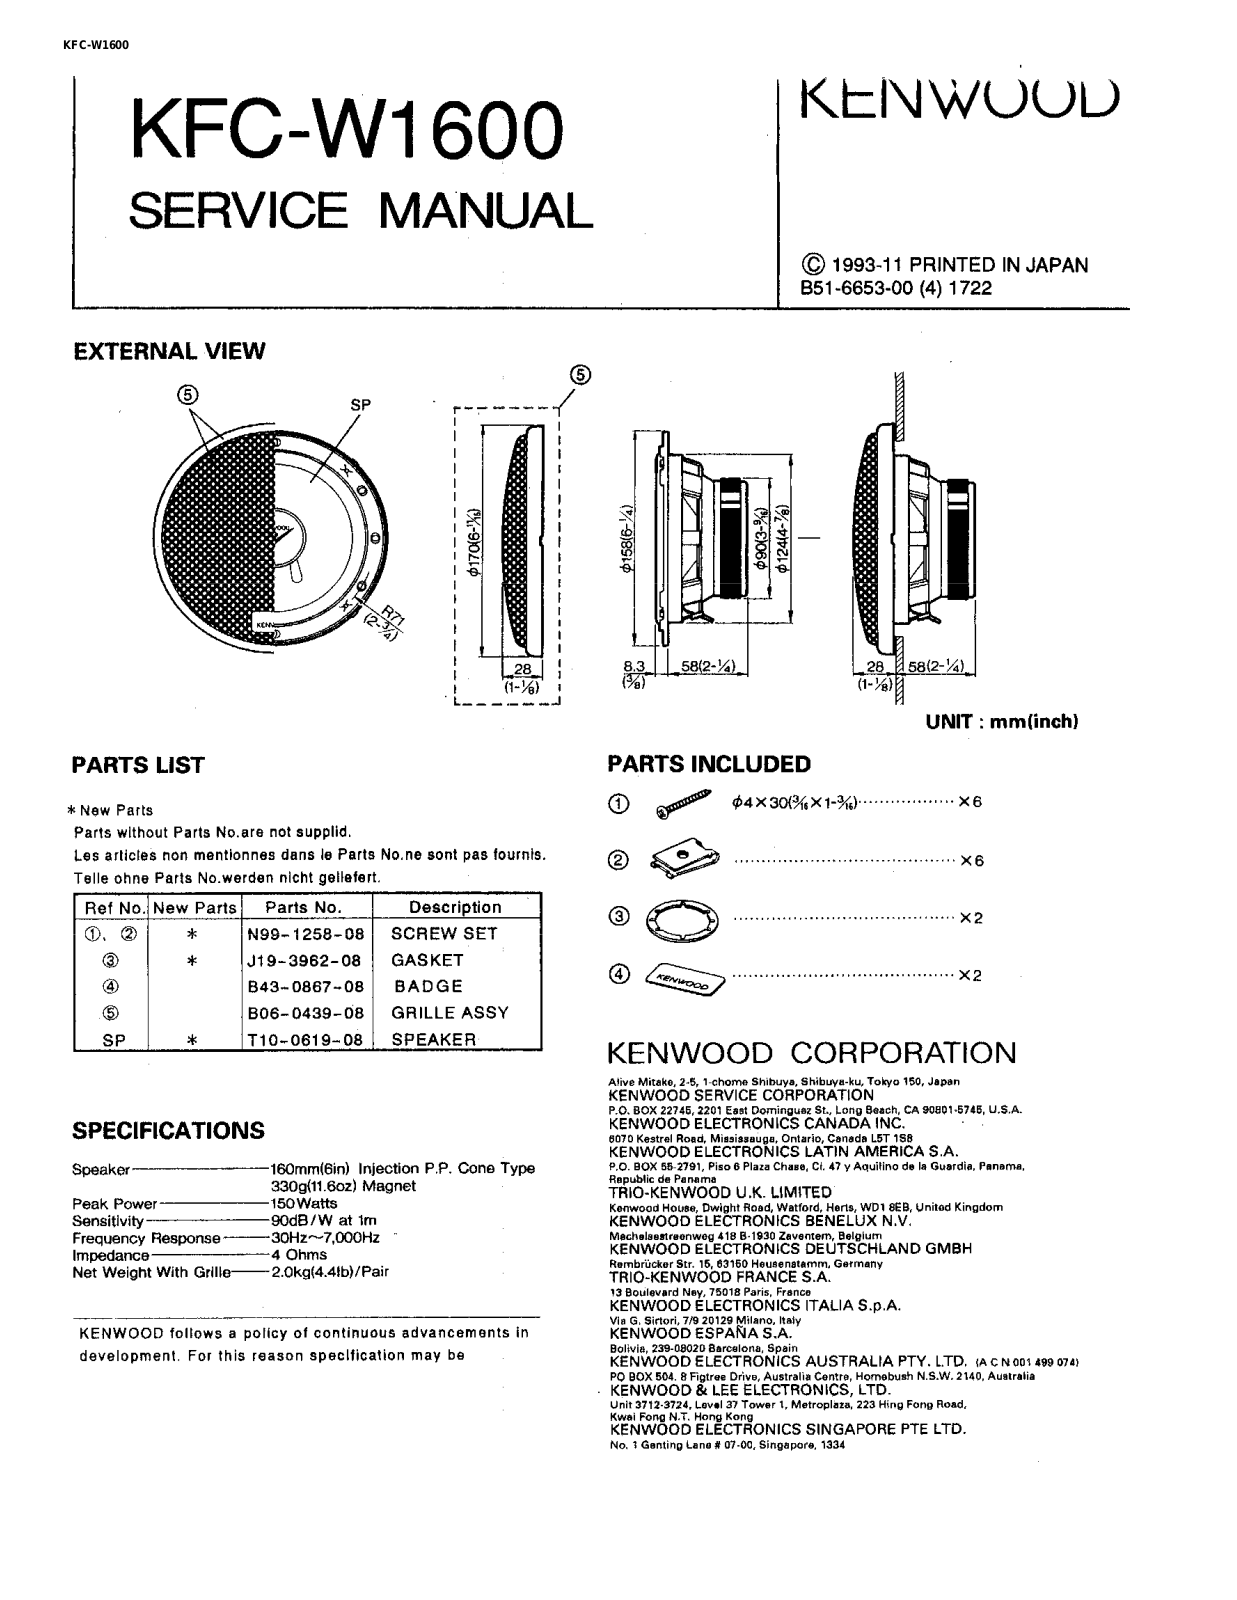 Kenwood KFC-W1600 Service Manual